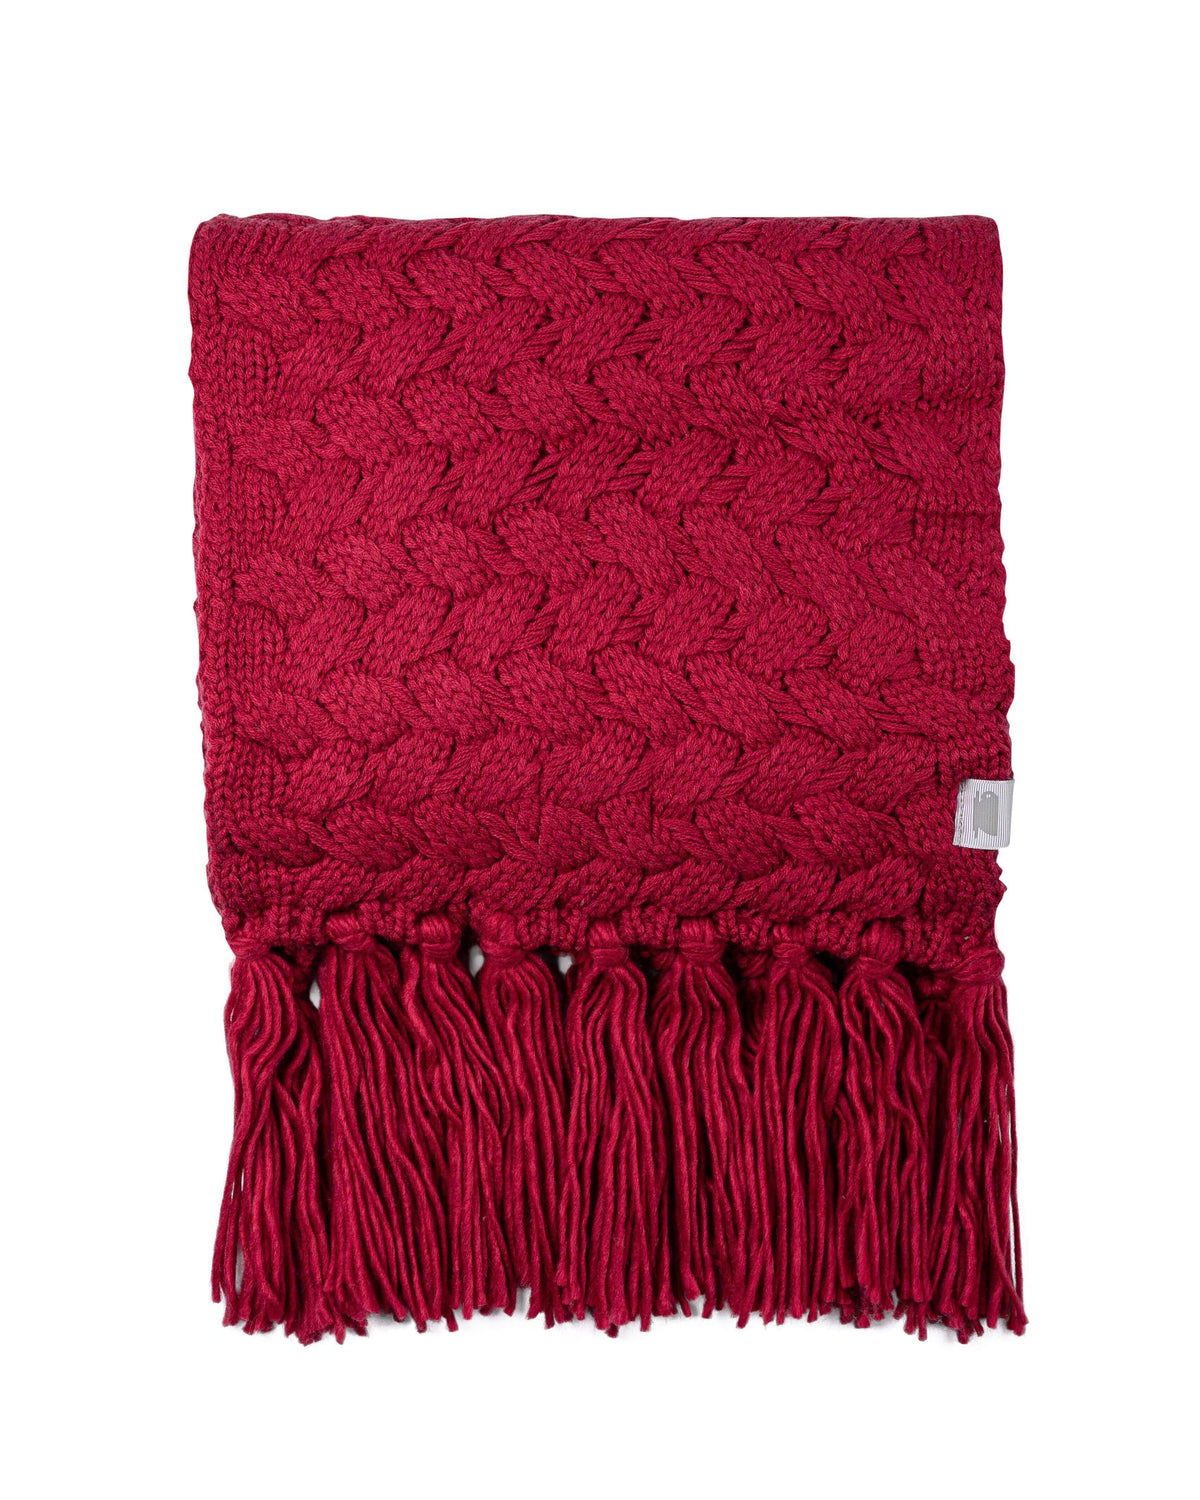 Basket Weave Tassel Wrap Scarf - Deep Red - LATTELOVE Co.